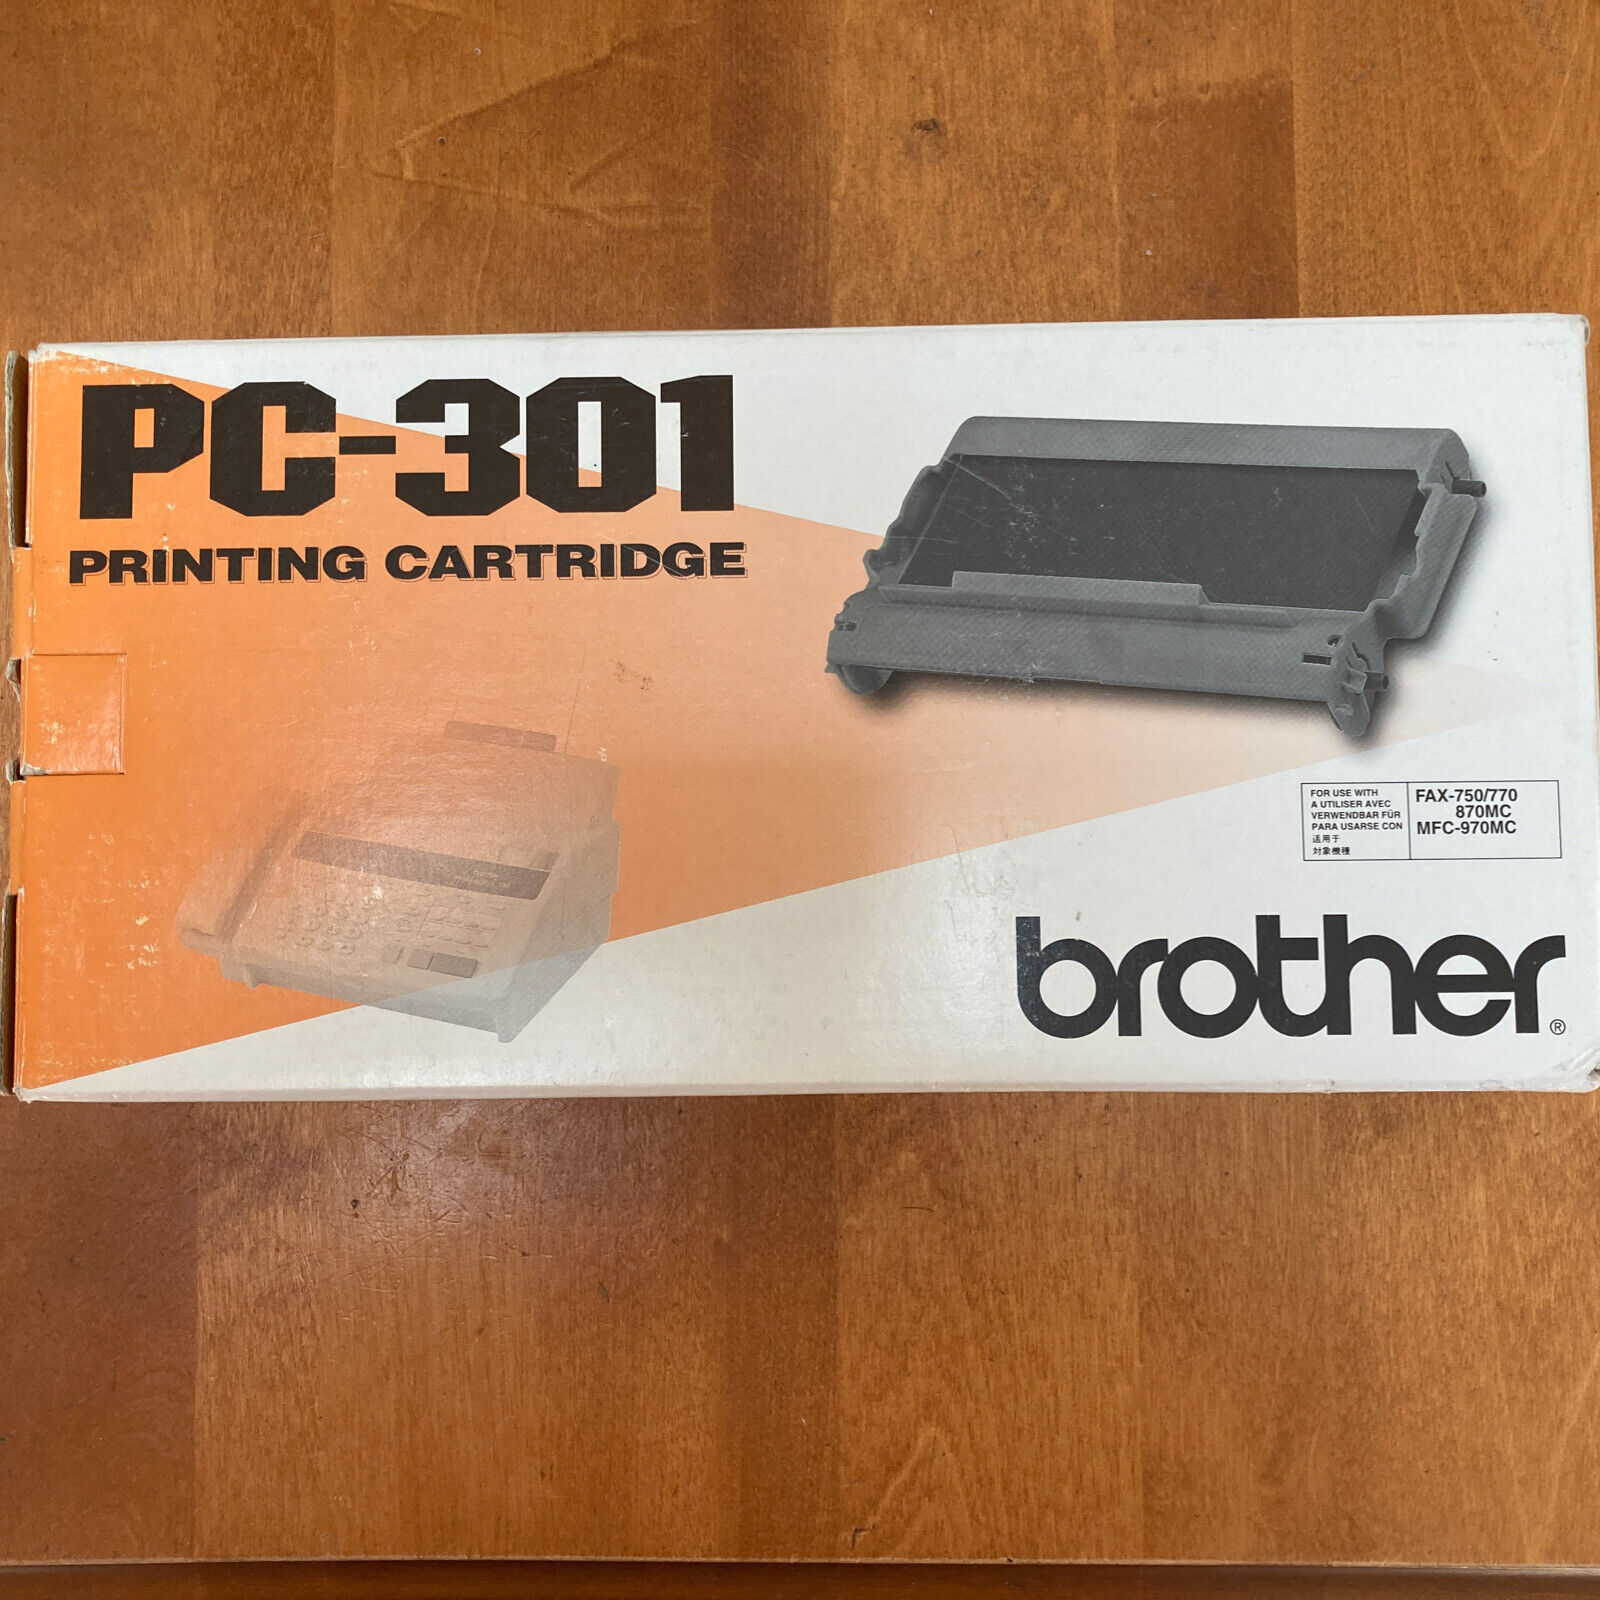 Brother PC-301 Black Toner Printing Cartridge for IntelliFax #PC301